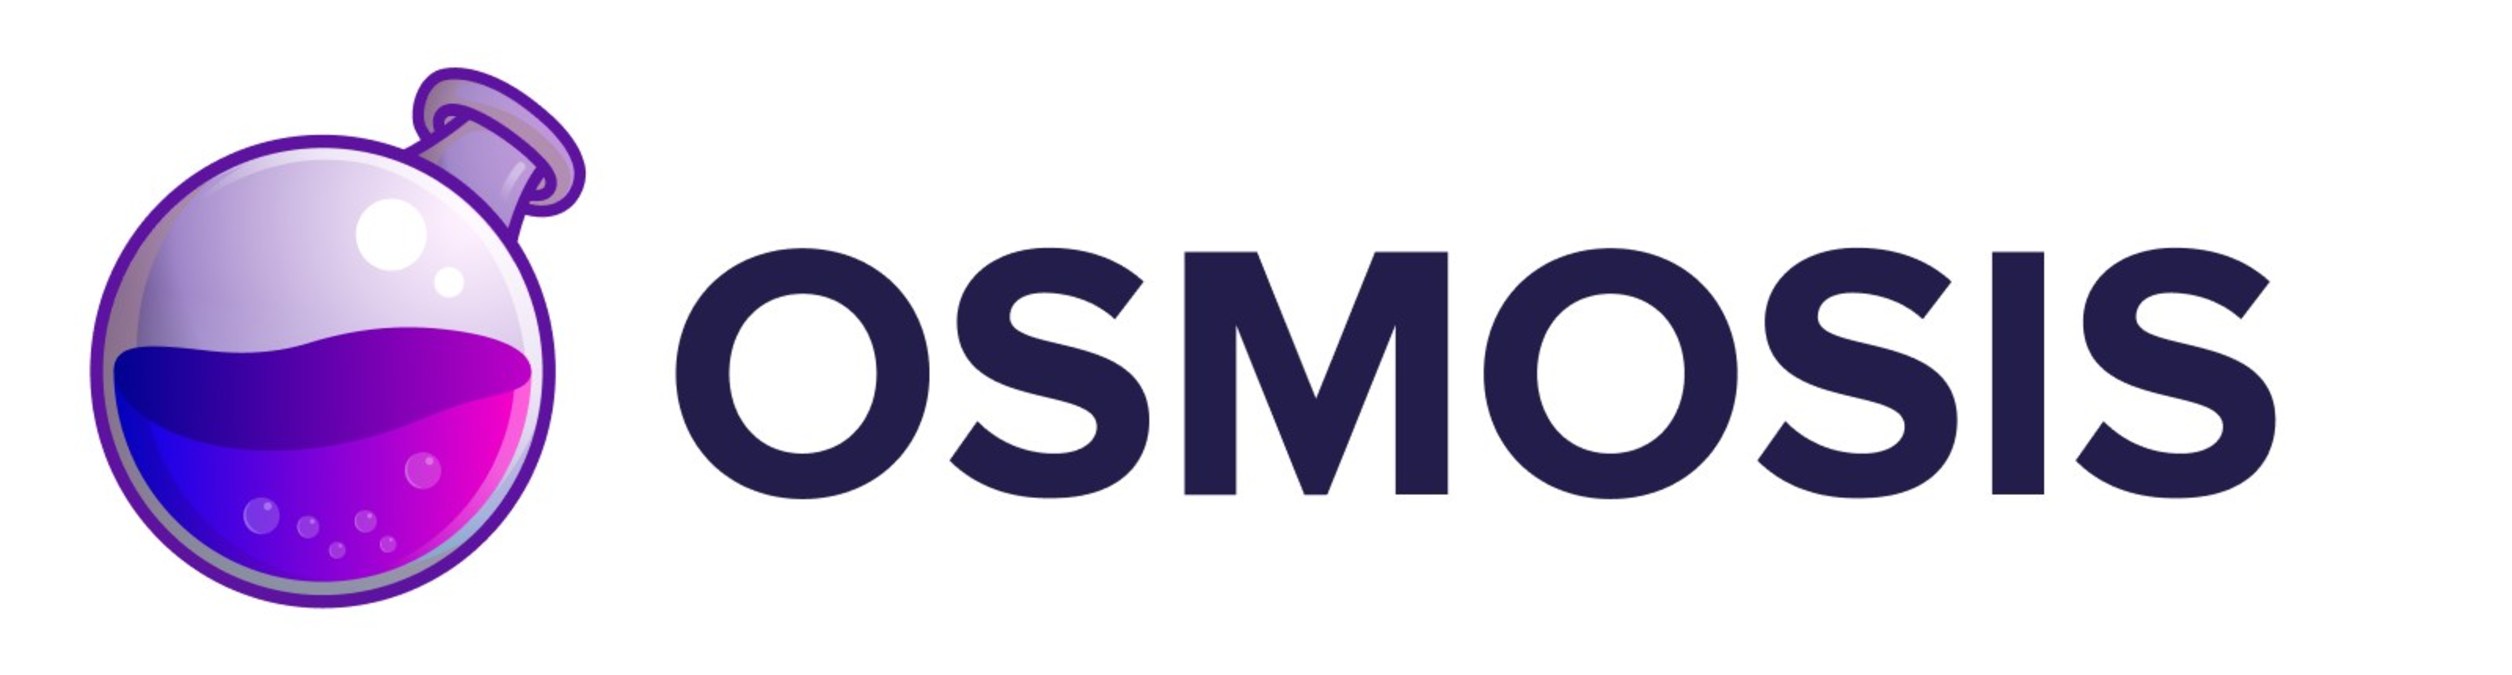 https://mma.prnewswire.com/media/1670974/Osmosis_Logo.jpg?p=twitter